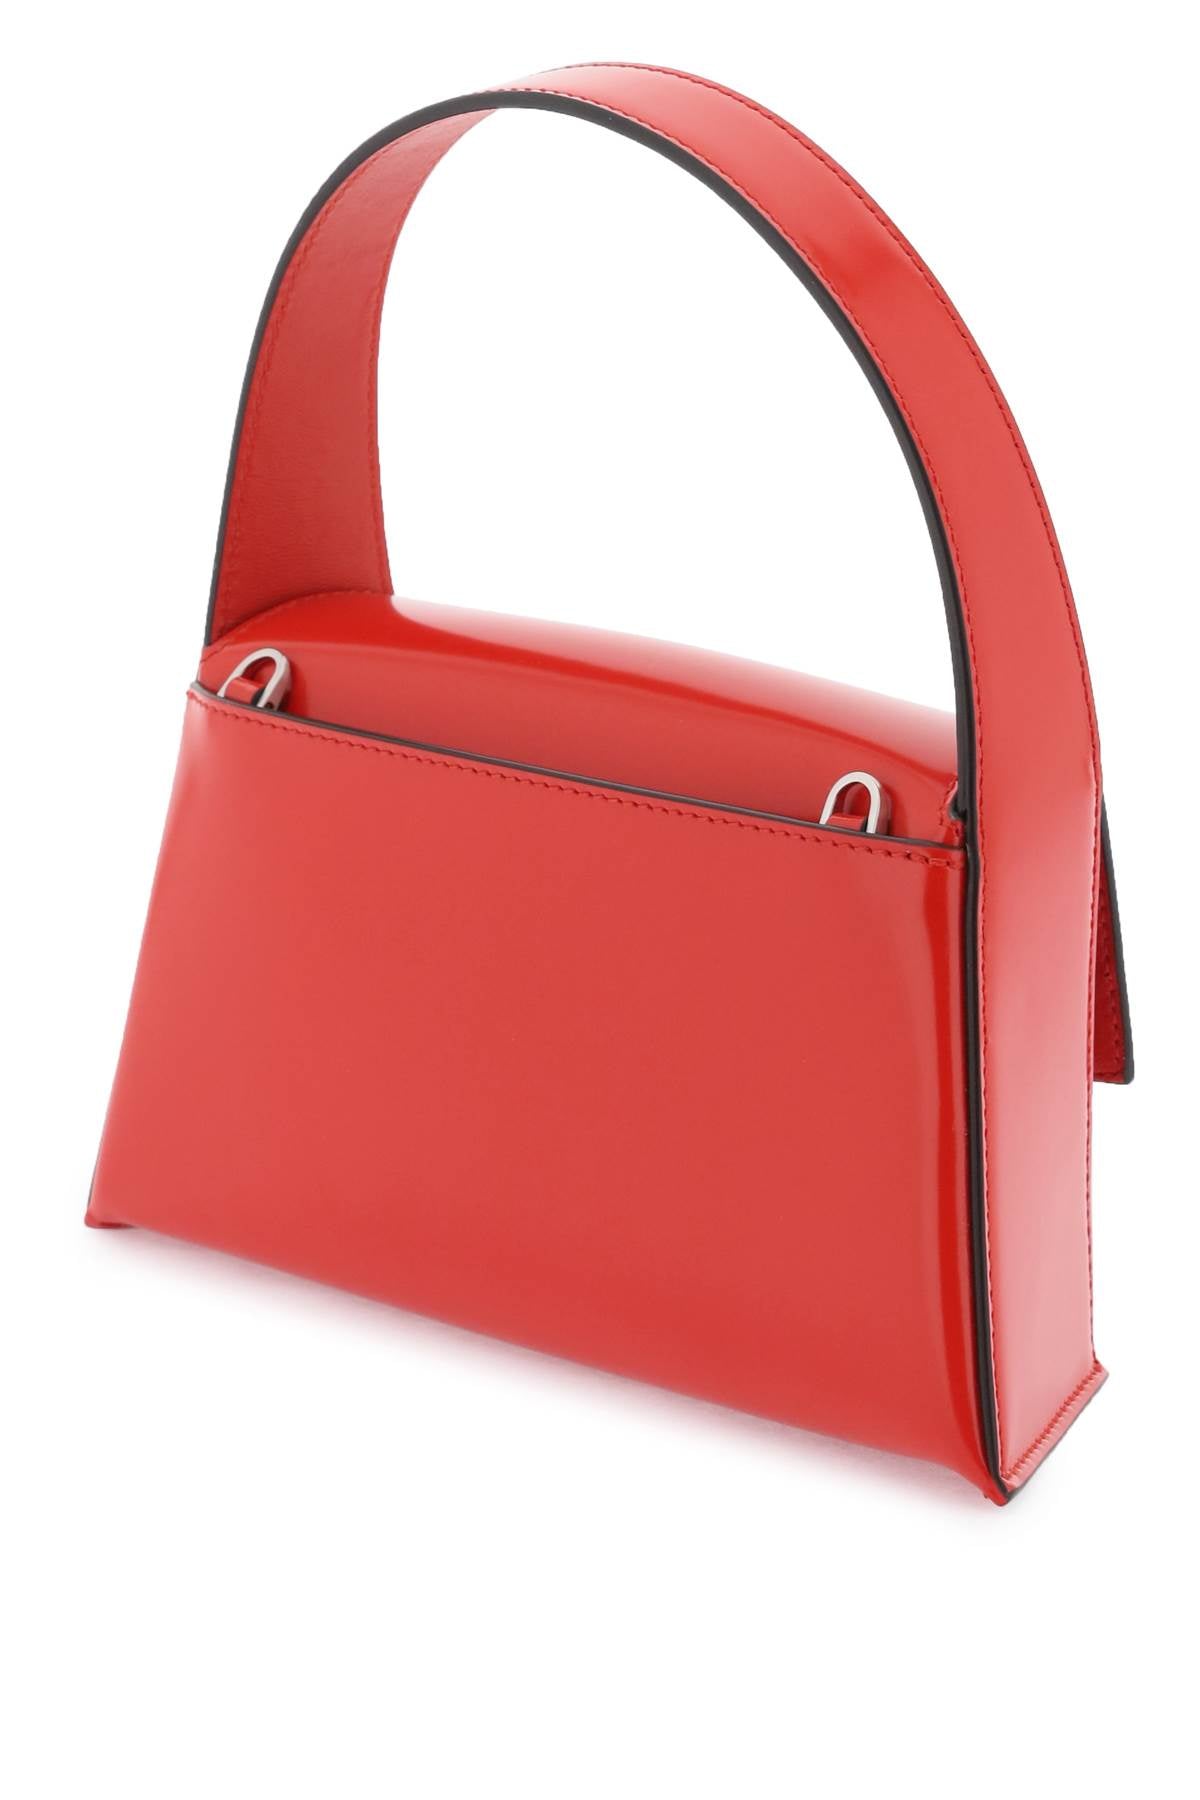 Shop Ferragamo Geometric Red Leather Handbag For Women